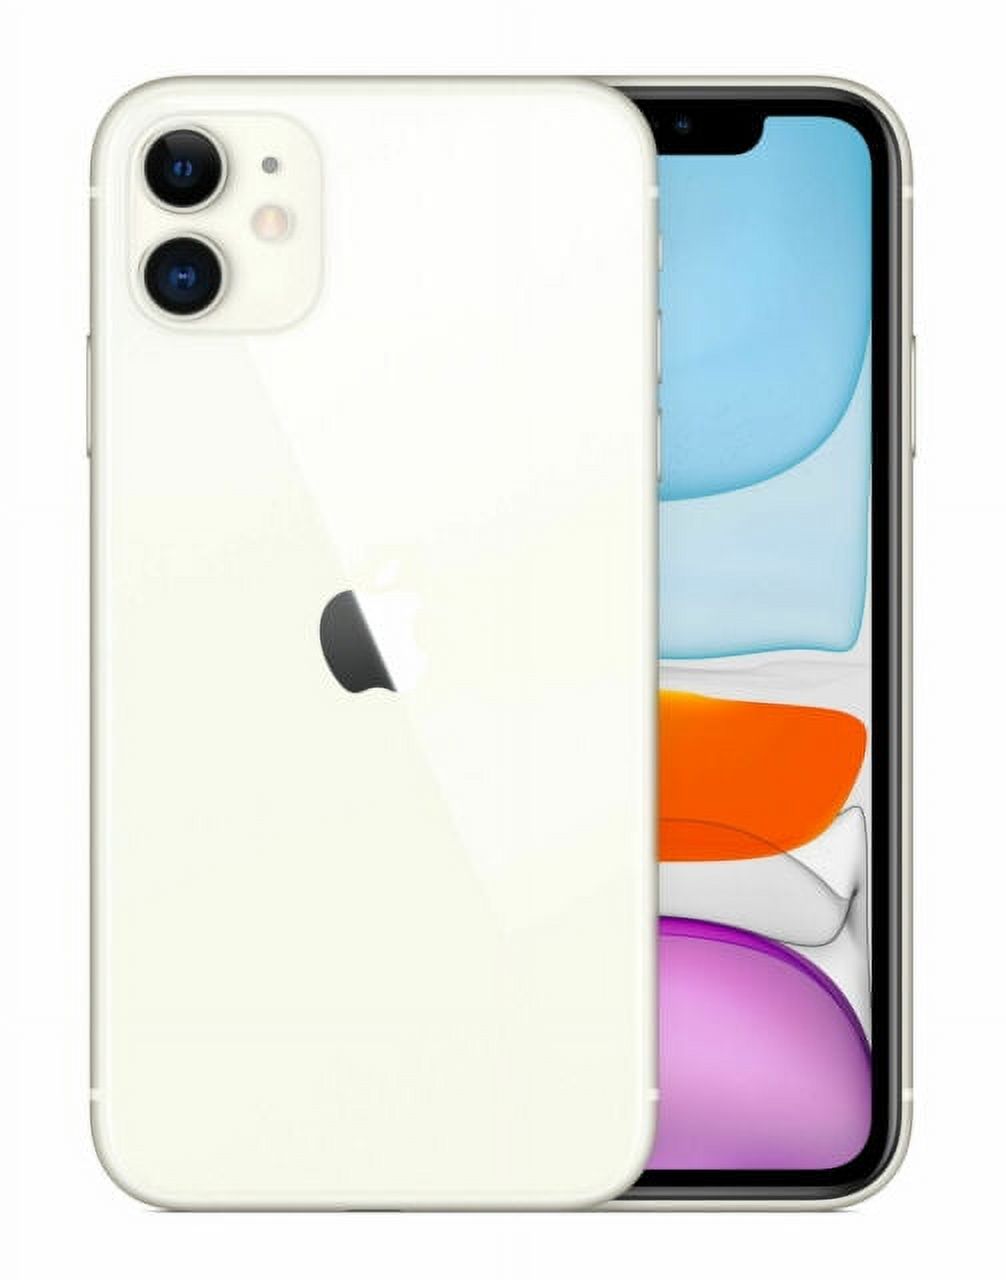 Apple iPhone 11 256GB White Fully Unlocked B Grade Refurbished - image 2 of 2